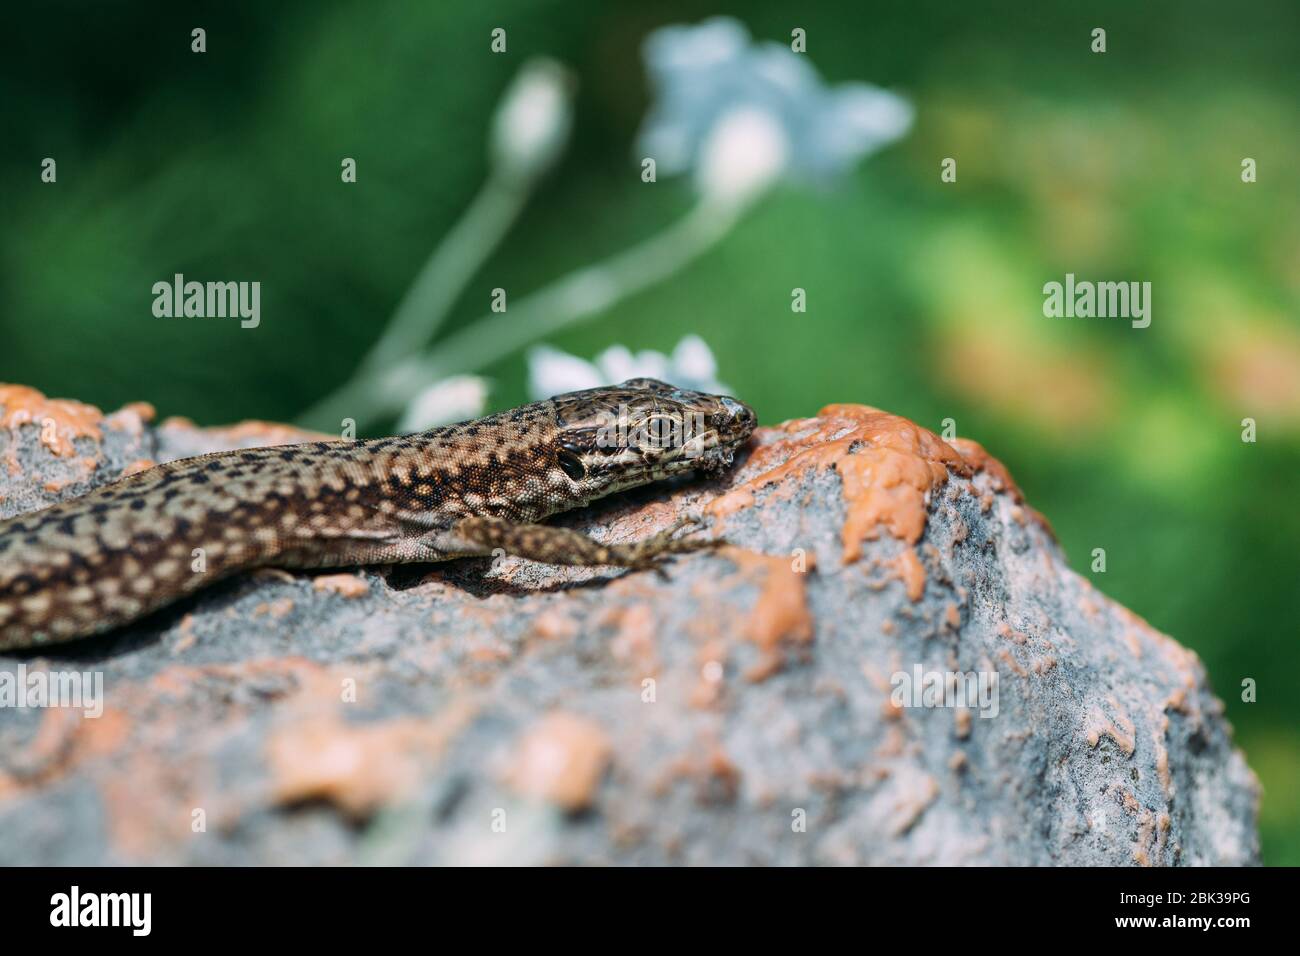 brown lizard lying on a stone Stock Photo